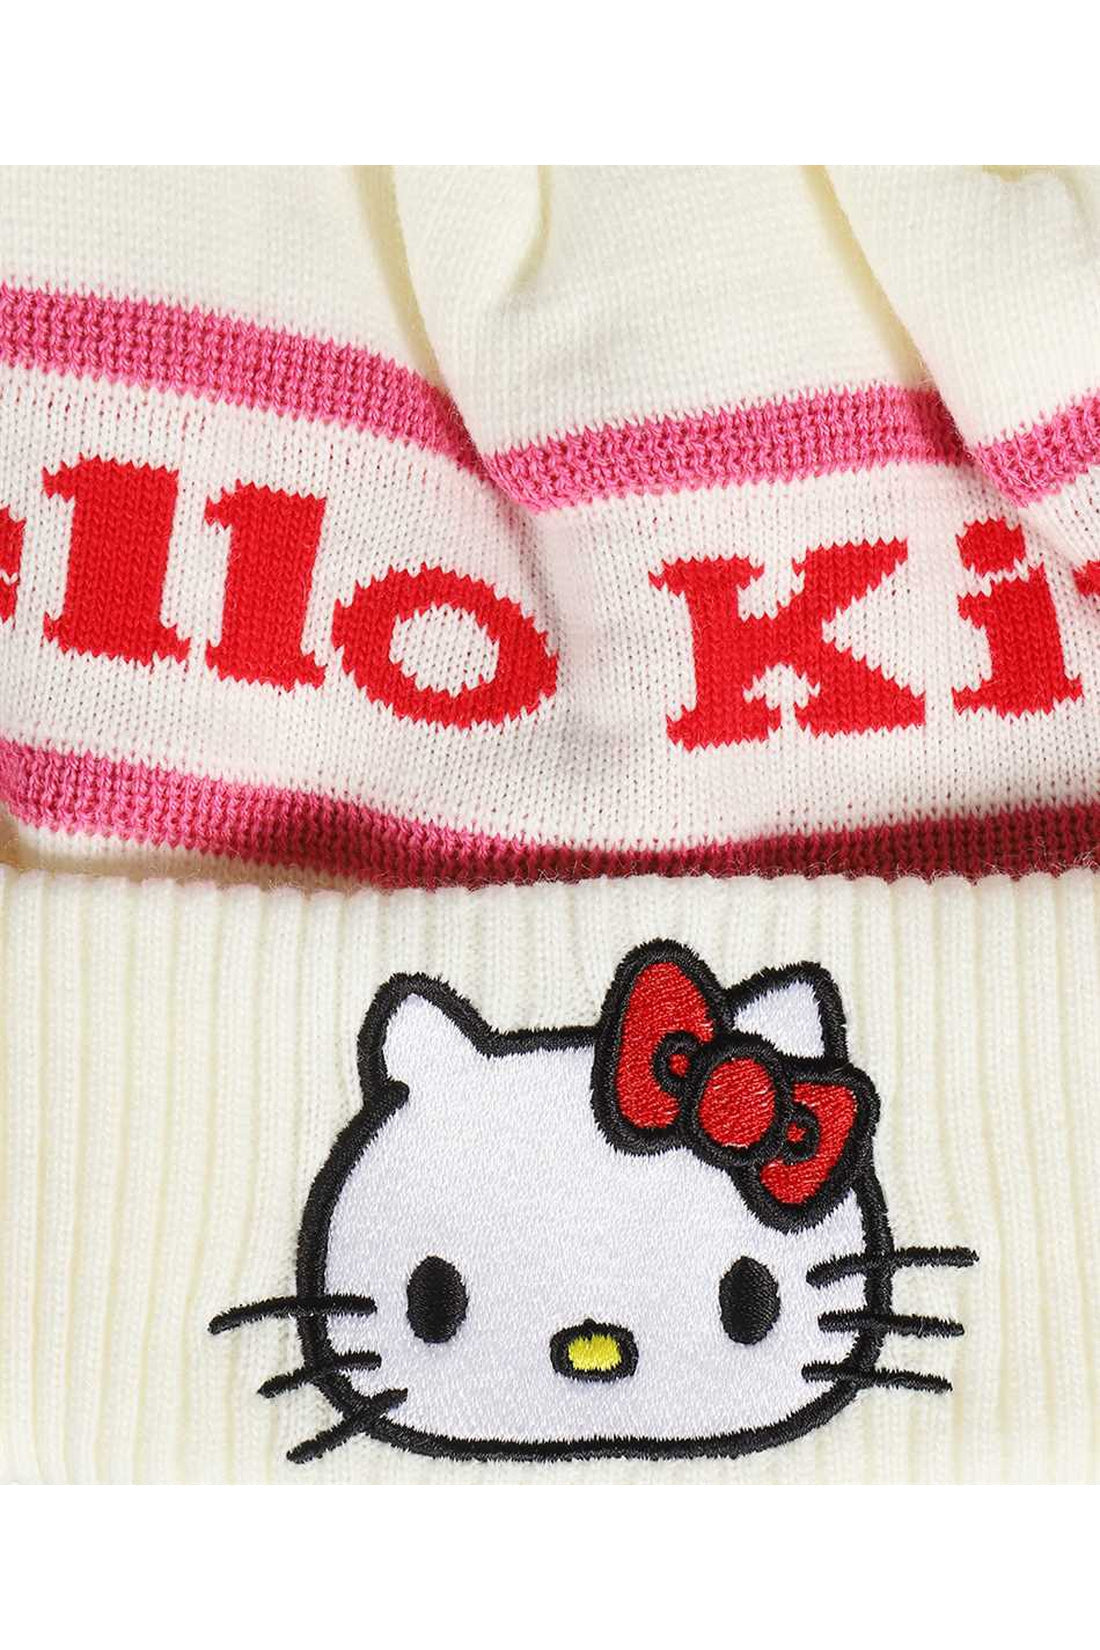 GCDS-OUTLET-SALE-GCDS x Hello Kitty - Beanie knitted beanie-ARCHIVIST